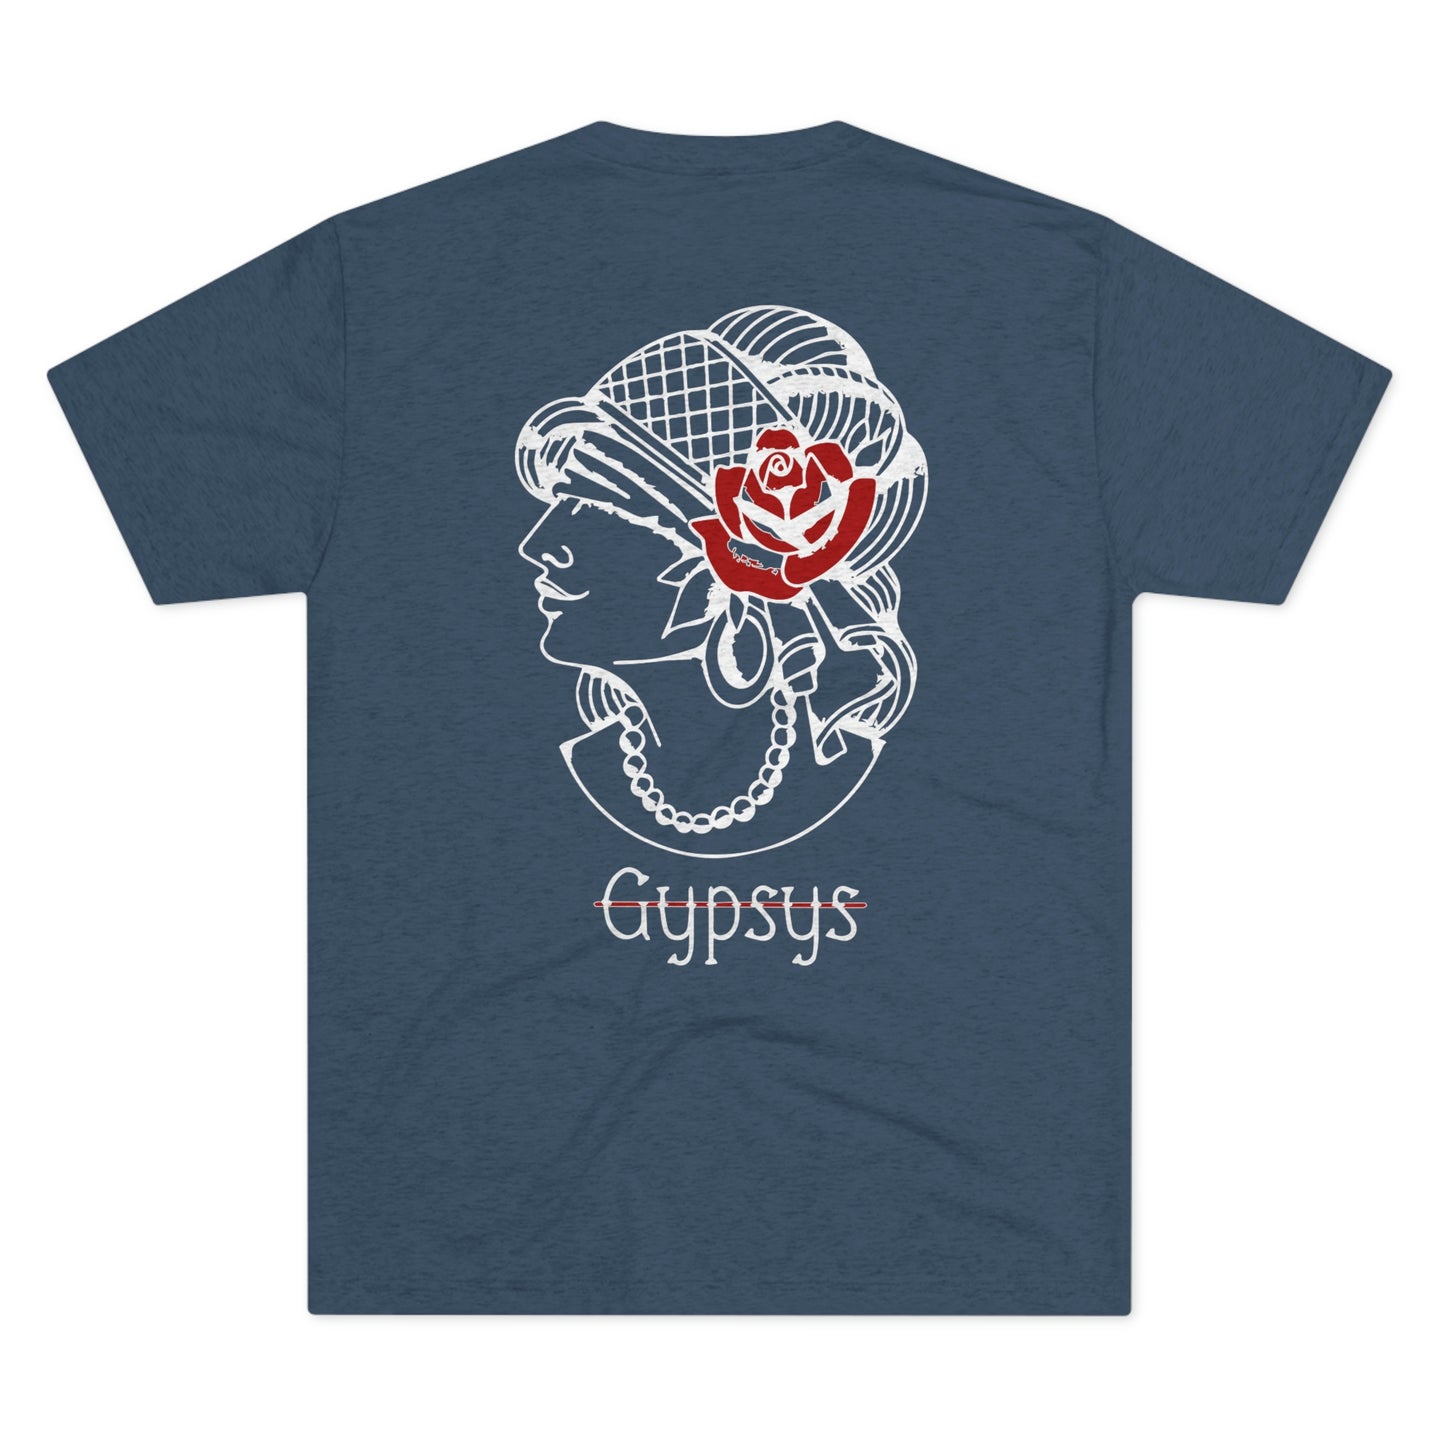 Unisex Tri-Blend Crew Tee | Gypsy's Red Rose Gypsy Lady (by @ryseart)